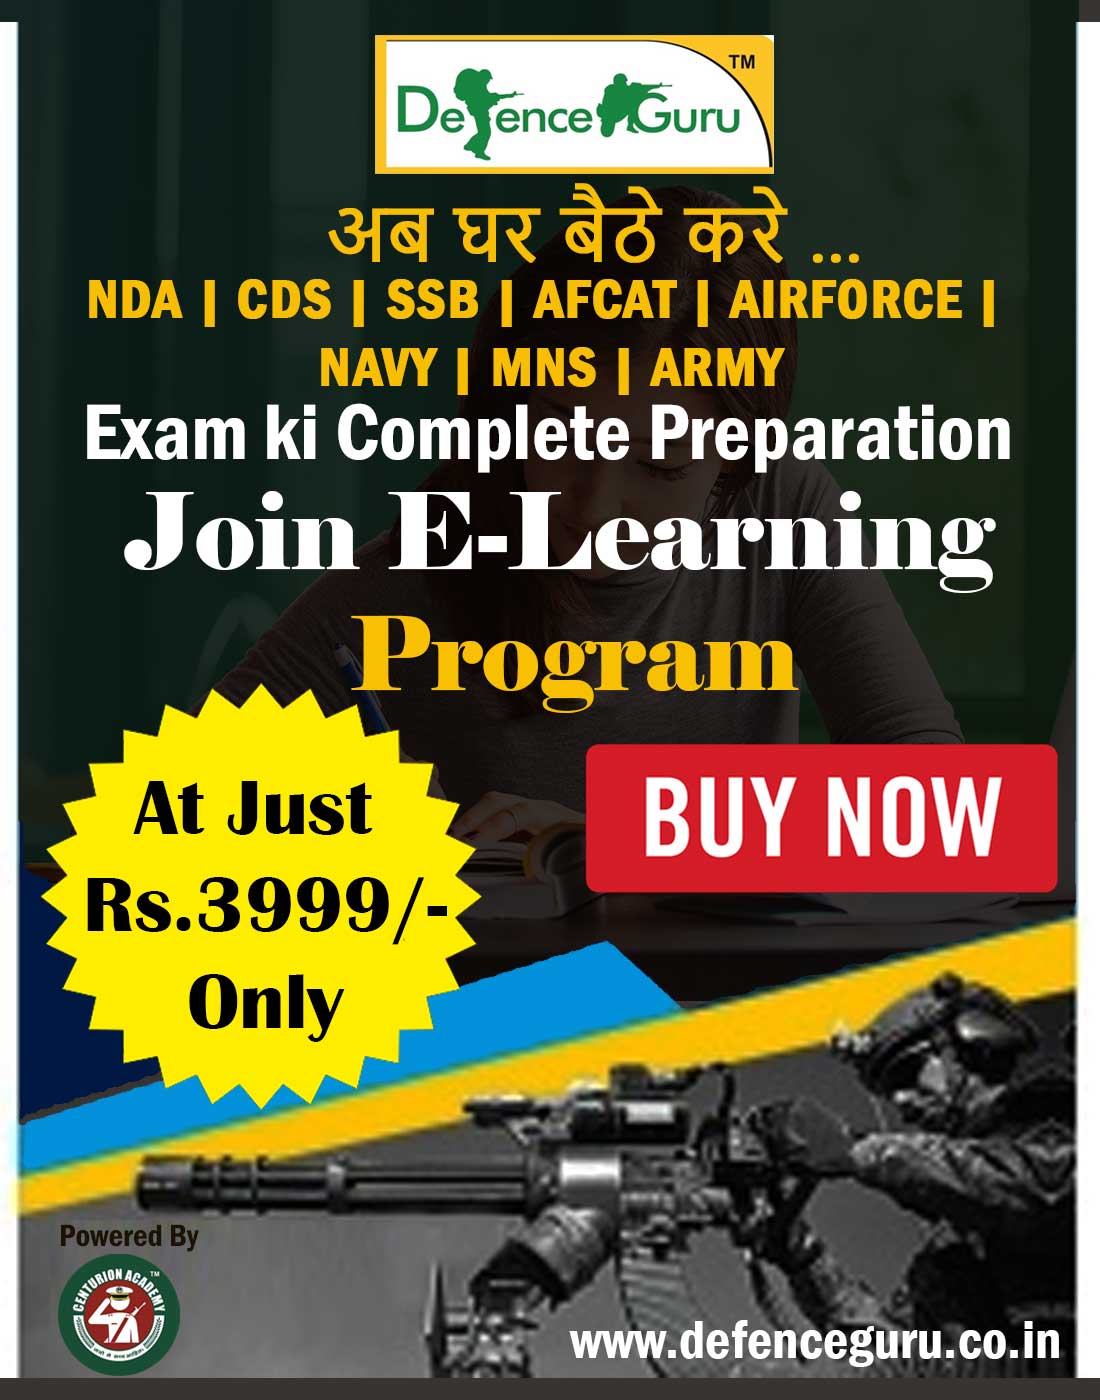 Join E-Learning Program for Defence Exam Preparation